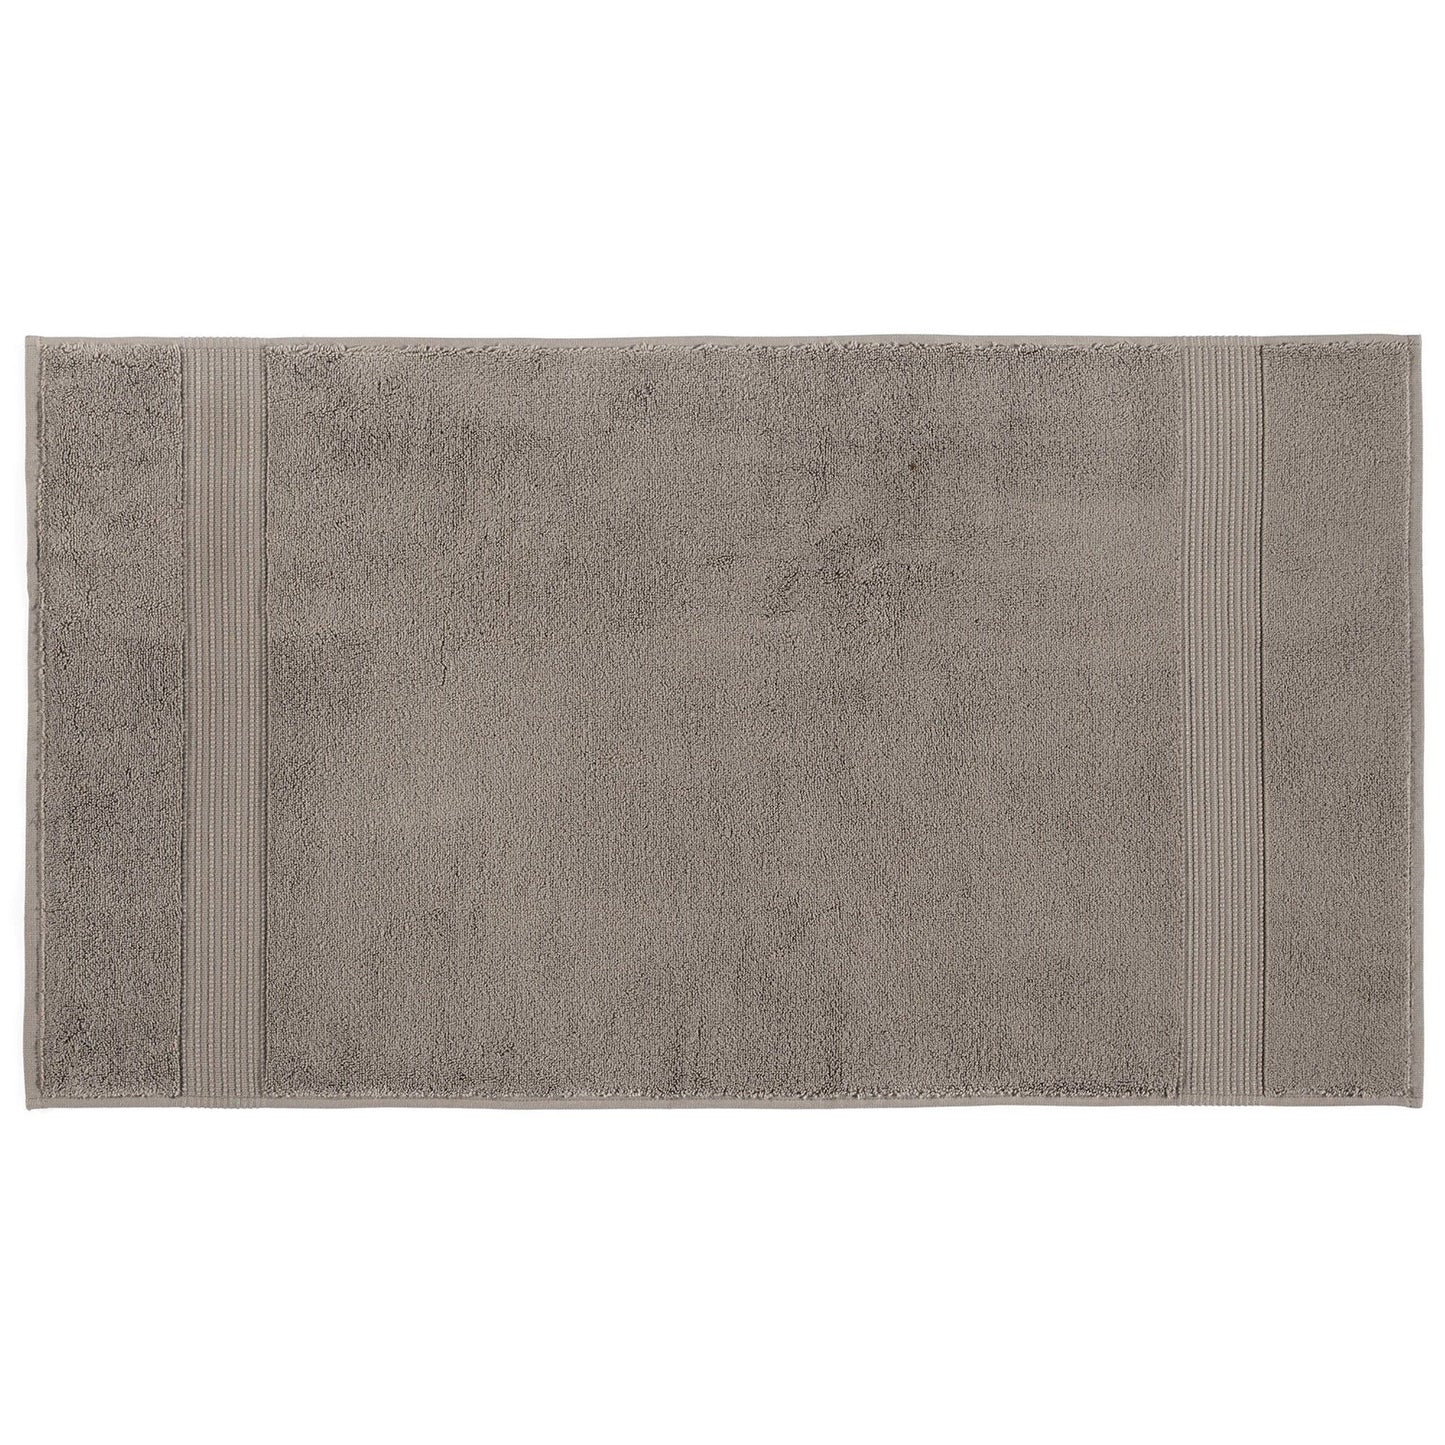 Håndklæde -  Chicago Bath - Varm grå